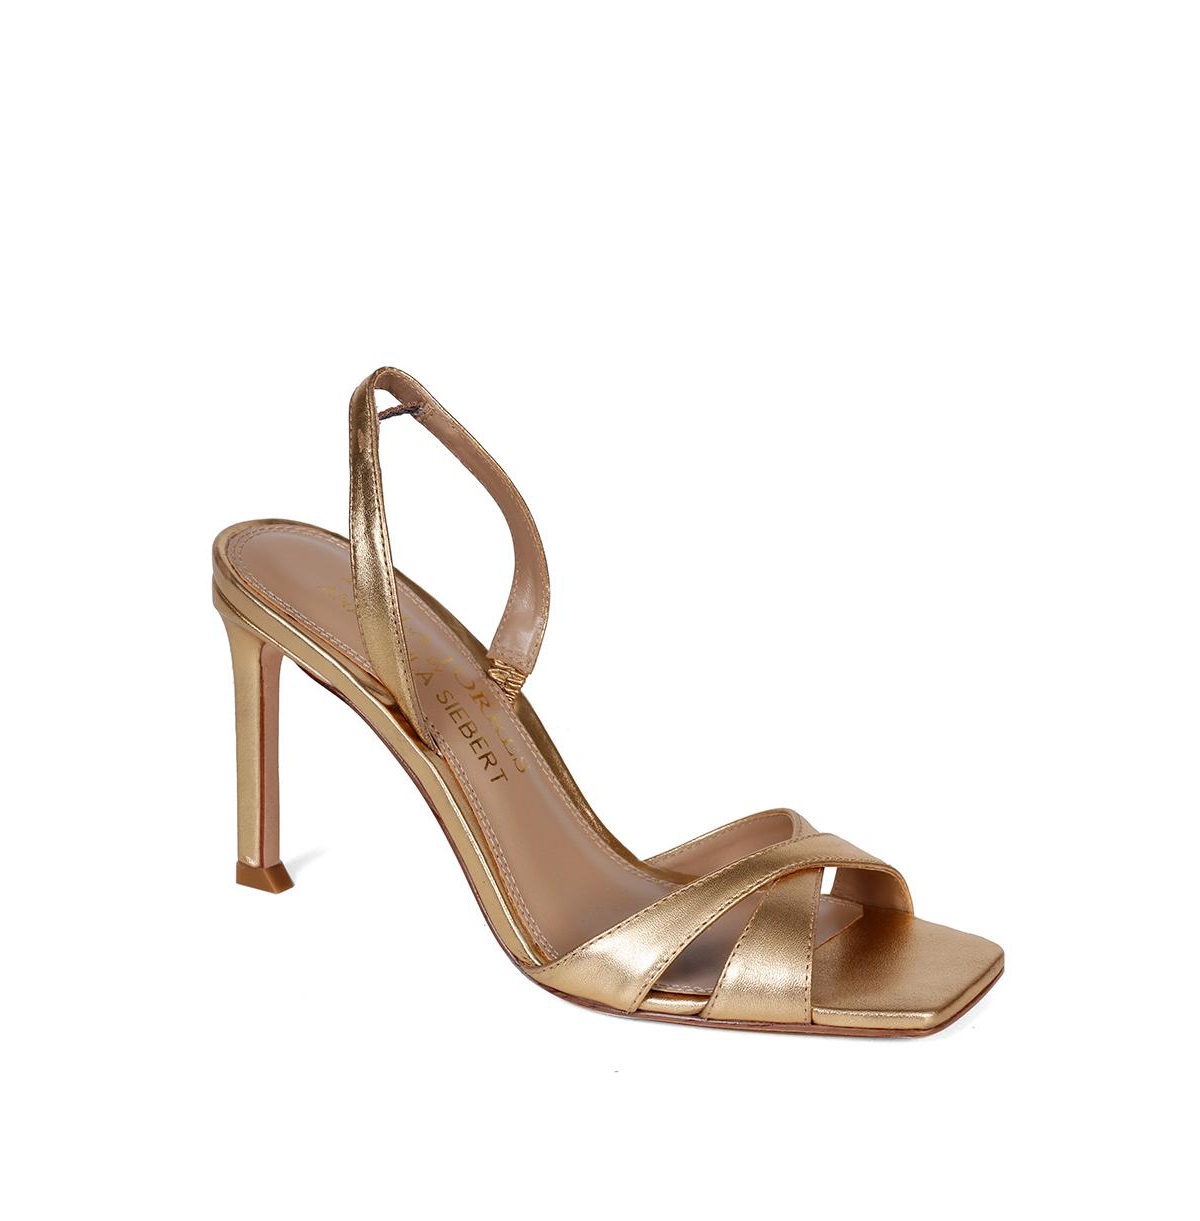 Shoes Women's Josi Slingback Dress Sandals - Gold